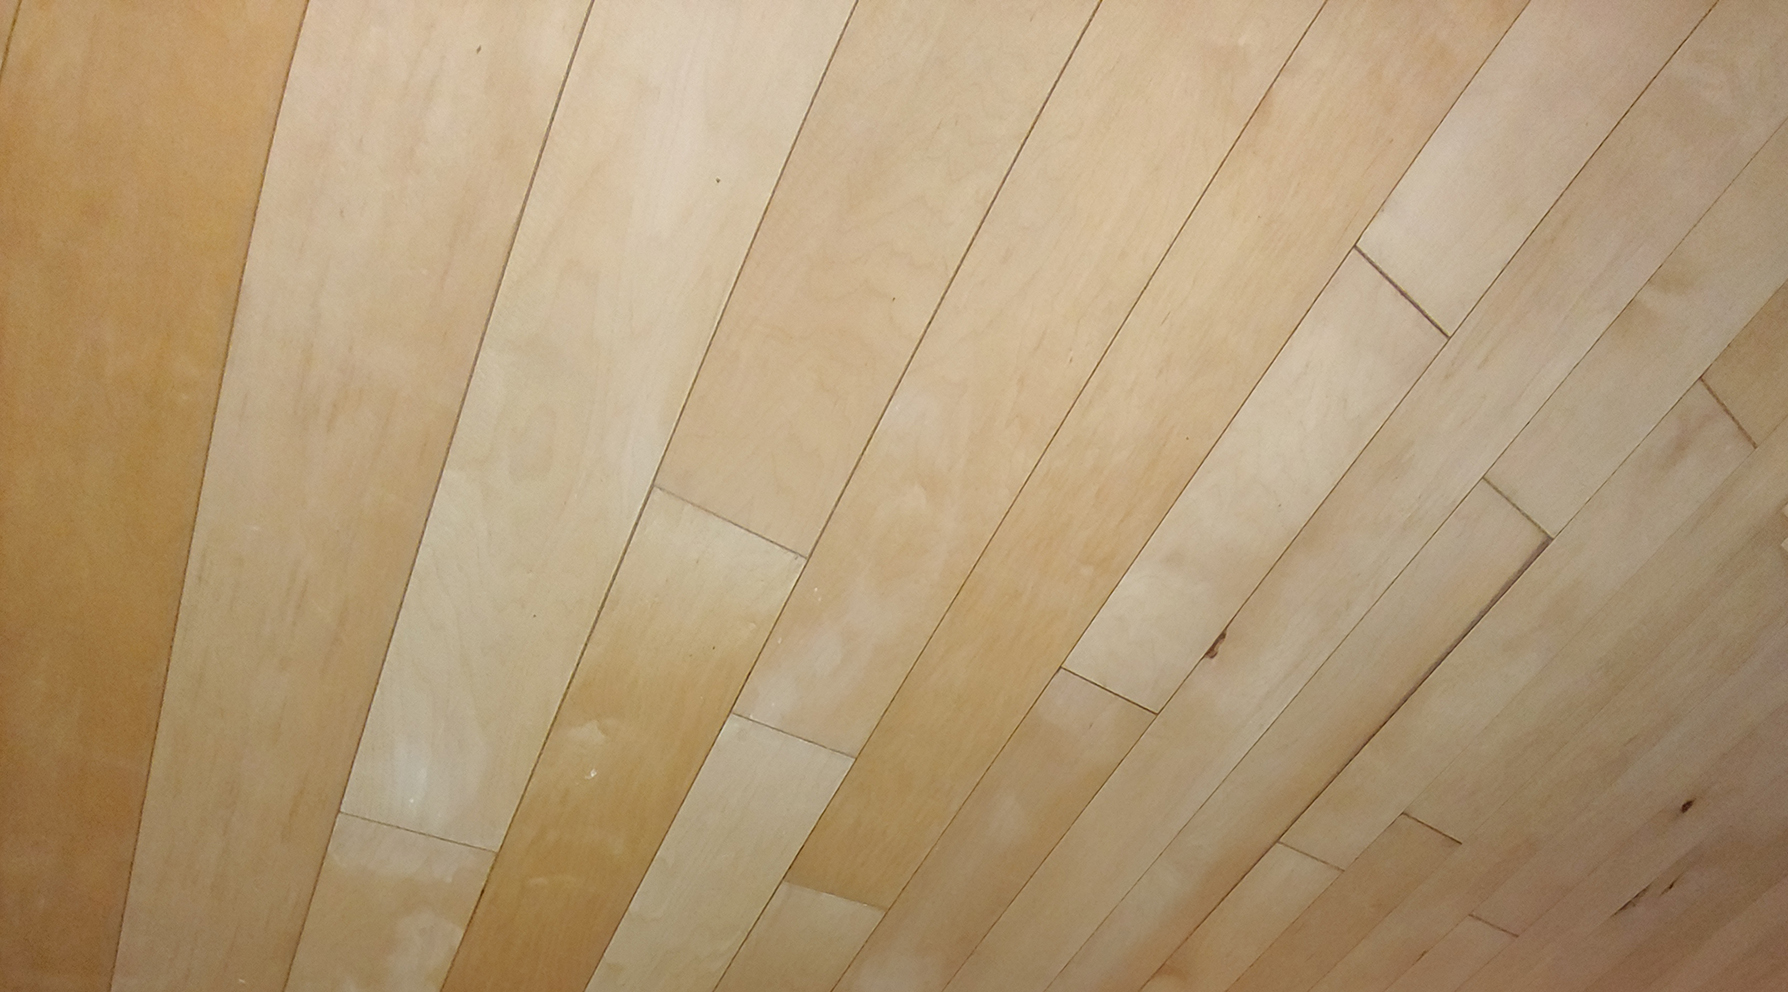 Backs of hardwood planks showing on the ceiling